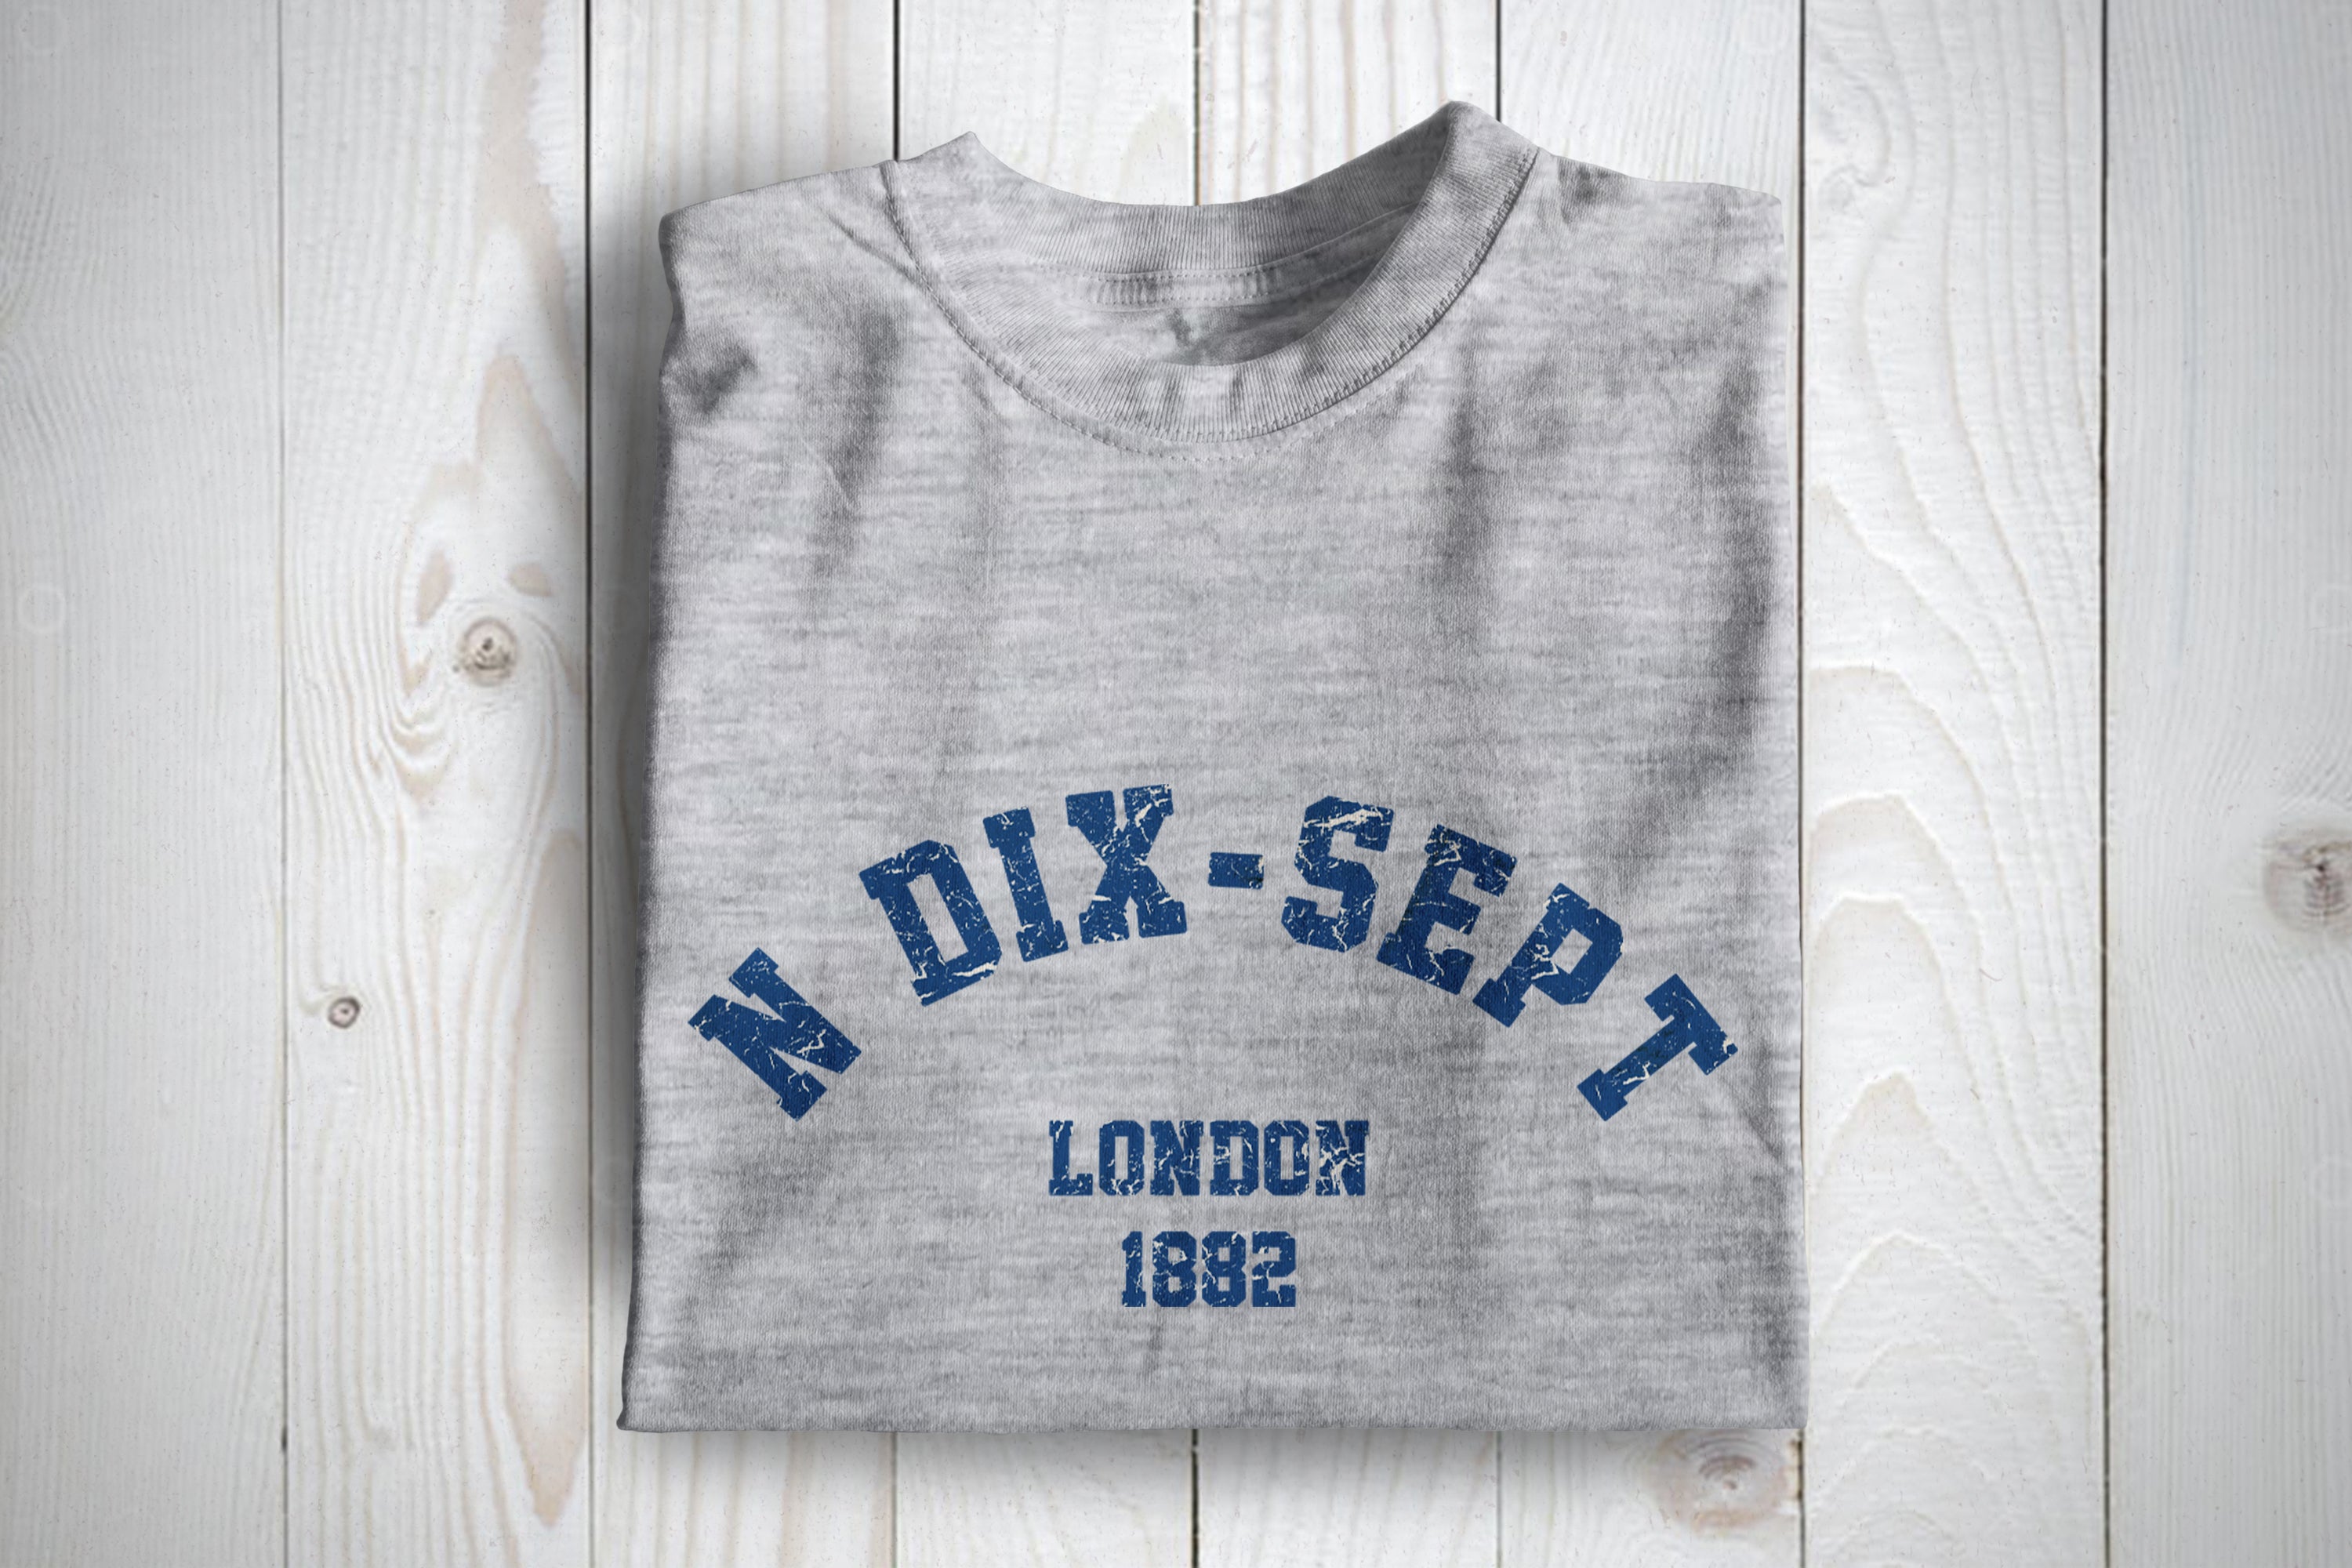 Tottenham N DIXSEPT Football Casuals 80s Dressers Subculture T Shirt